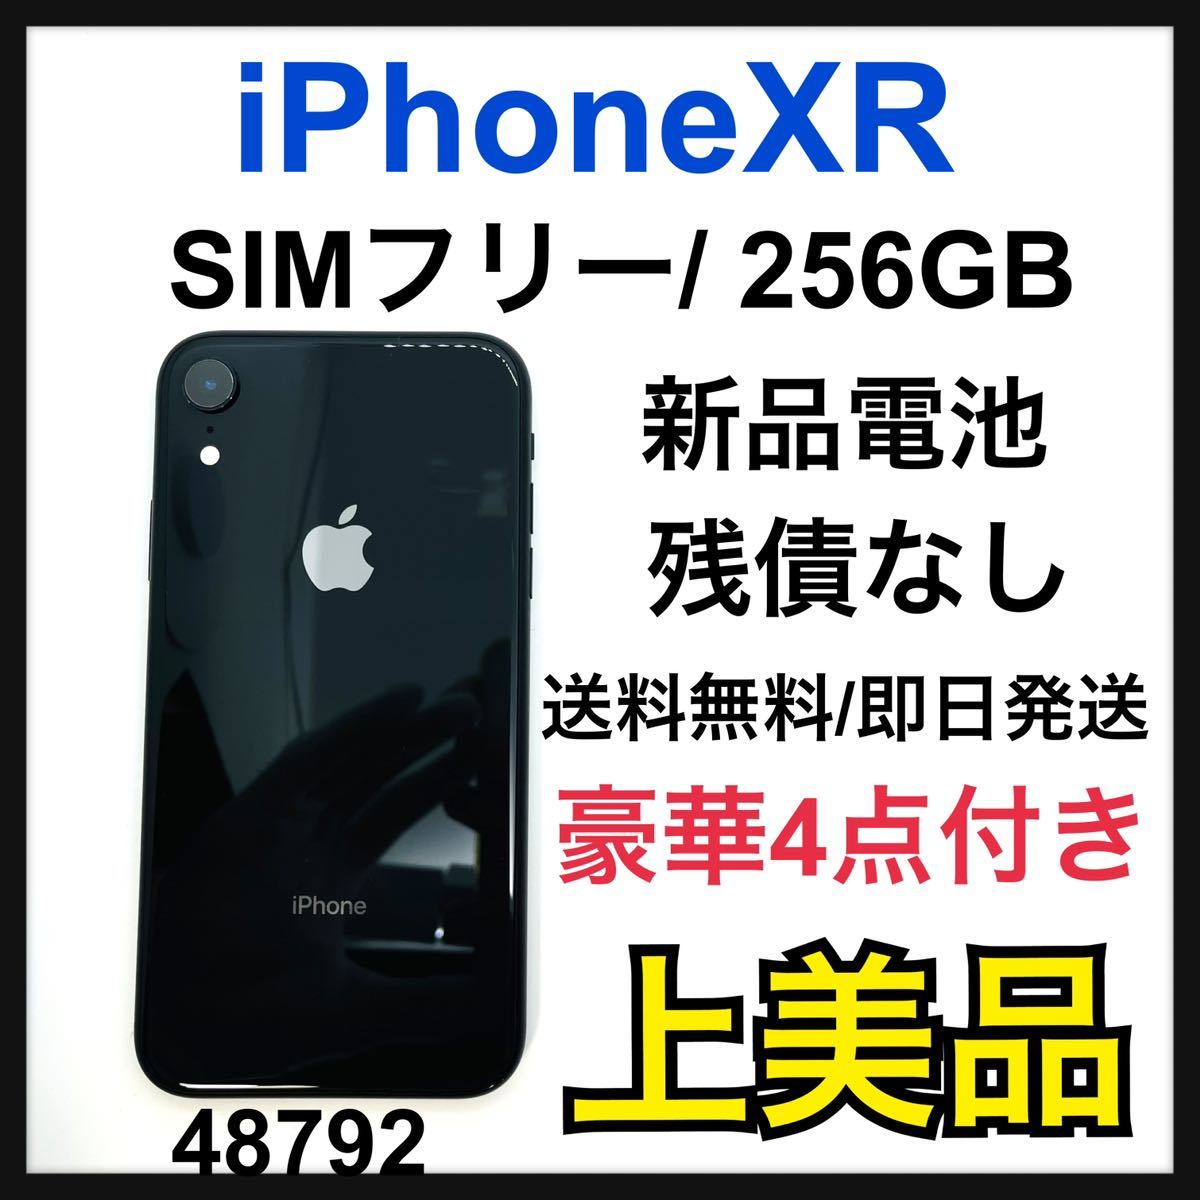 iPhone 7 Jet Black 256 GB SIMフリー | myglobaltax.com